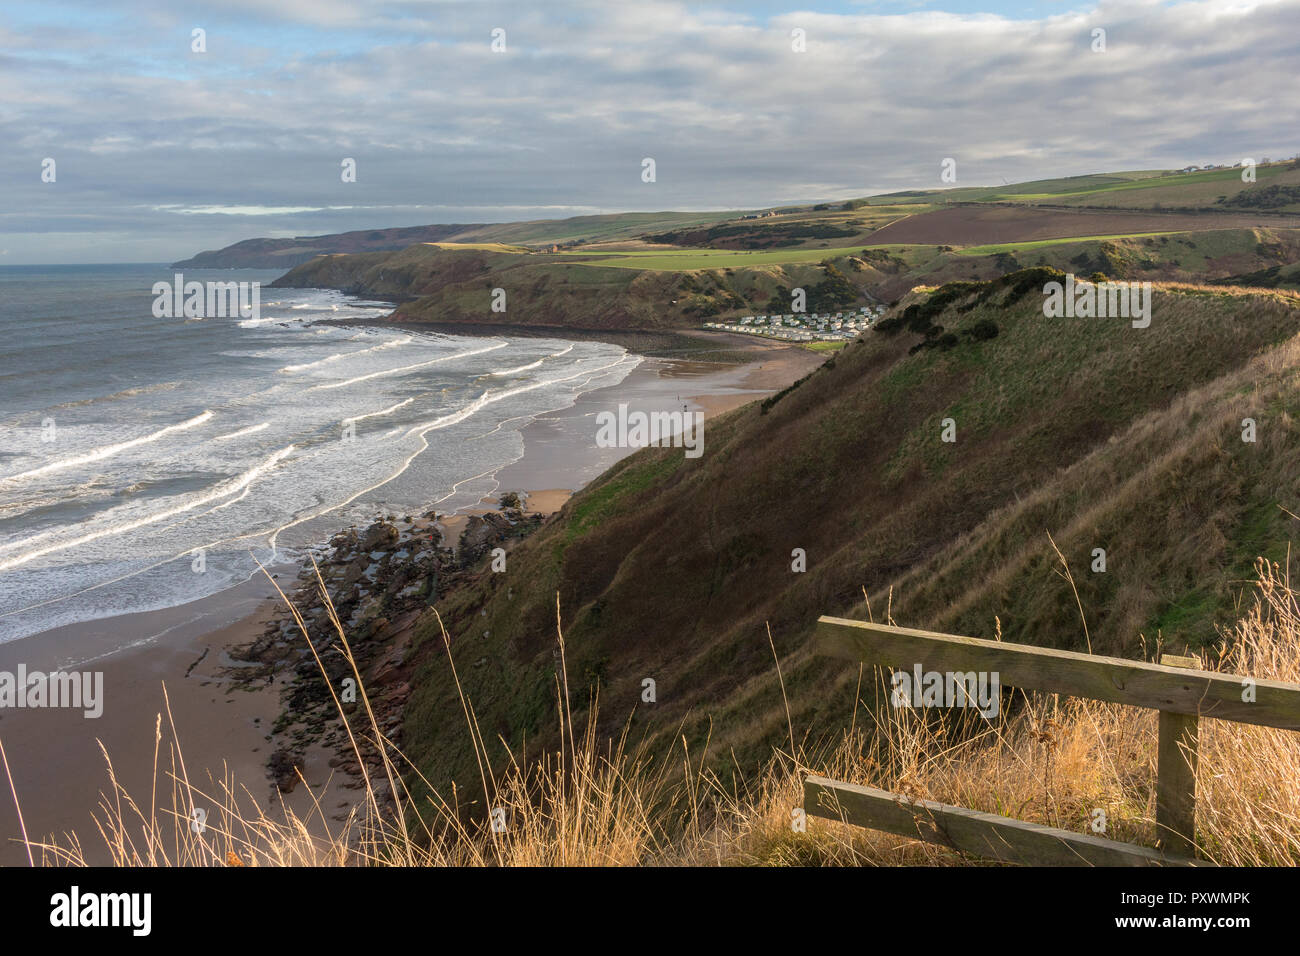 A beautiful coastal scene of the Scottish cliffs. Stock Photo